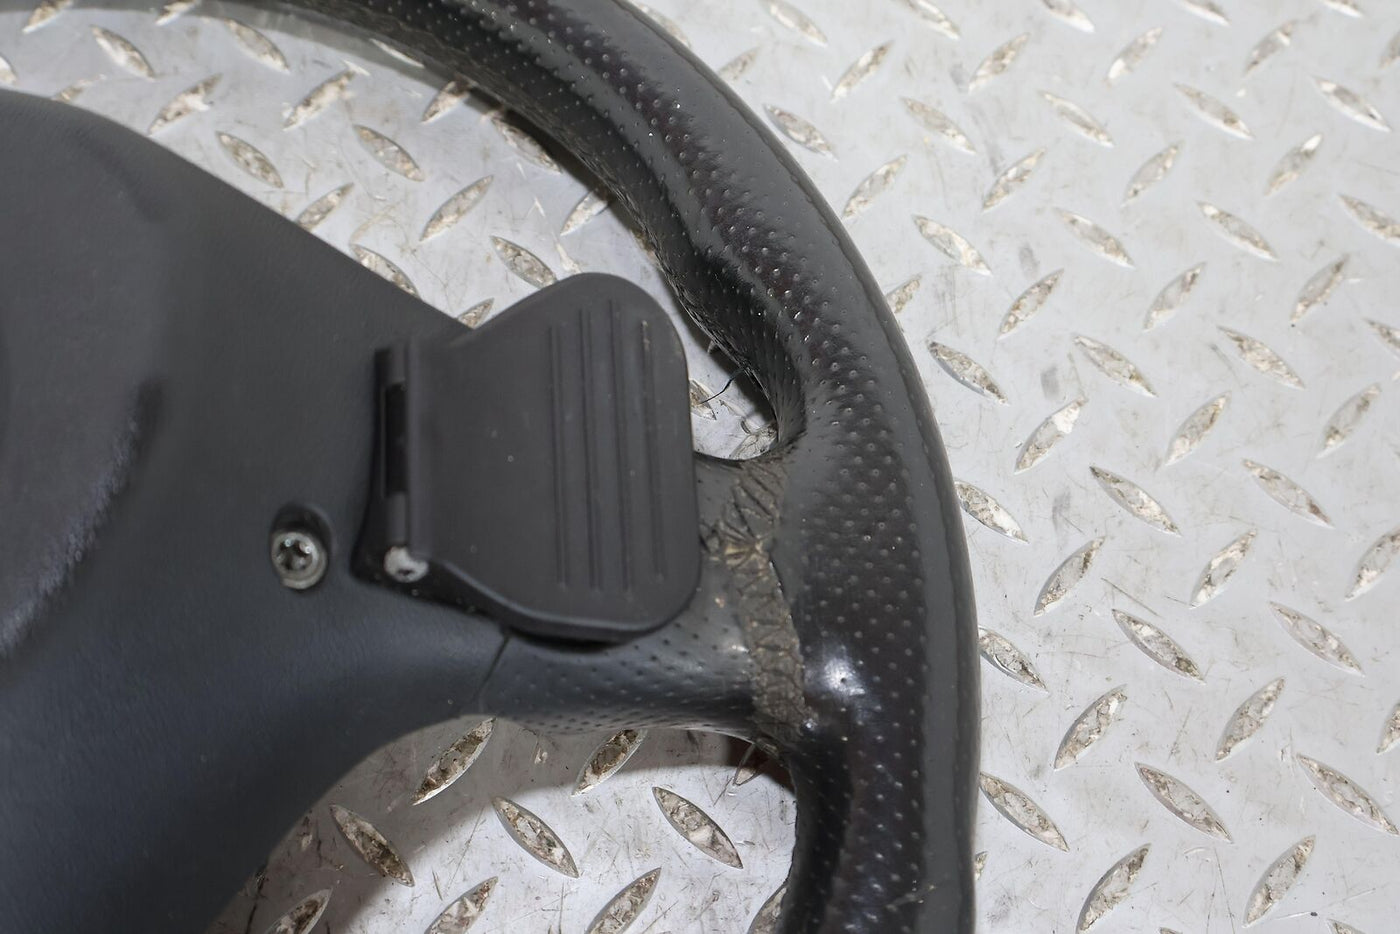 03-04 Audi RS6 OEM Leather Steering Wheel (Black QH) Mild Wear